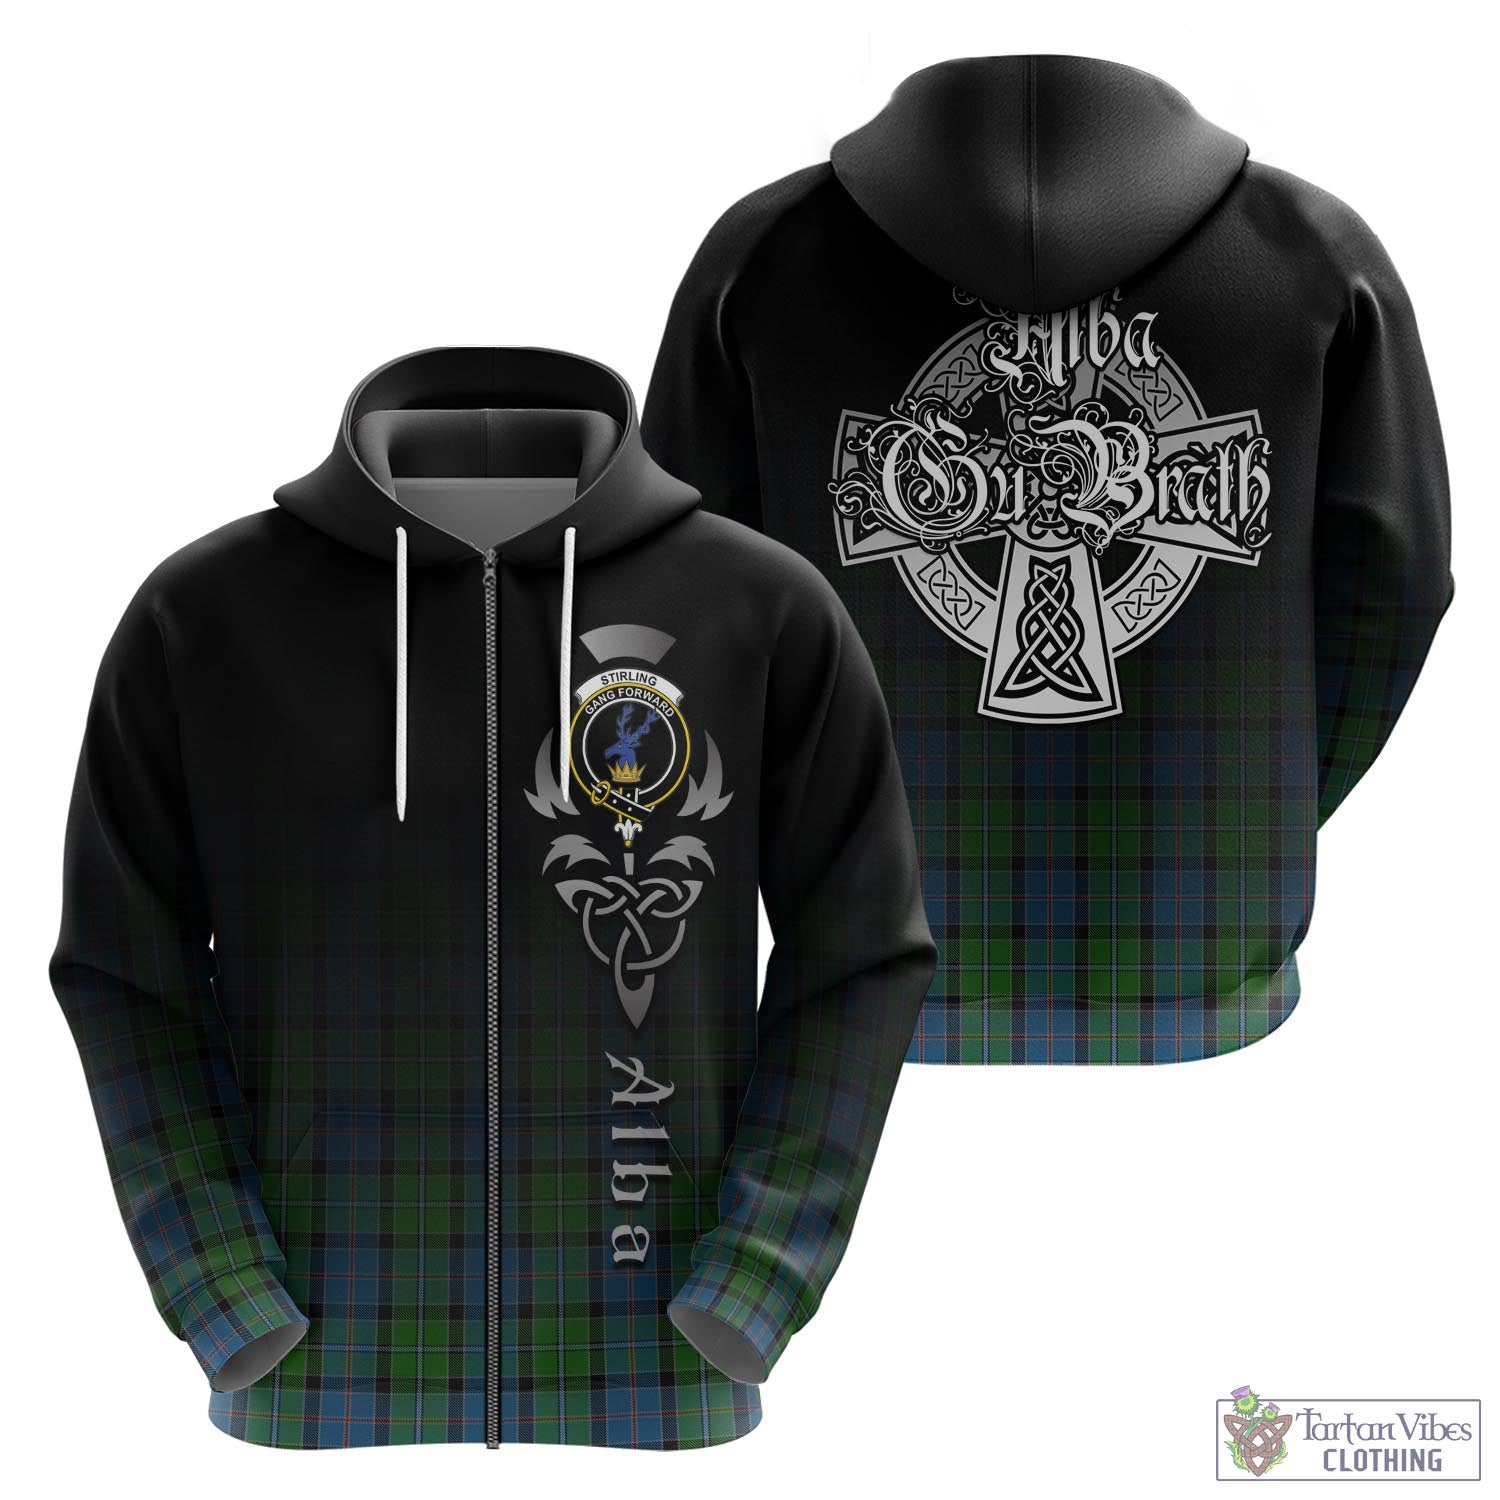 Tartan Vibes Clothing Stirling Tartan Hoodie Featuring Alba Gu Brath Family Crest Celtic Inspired